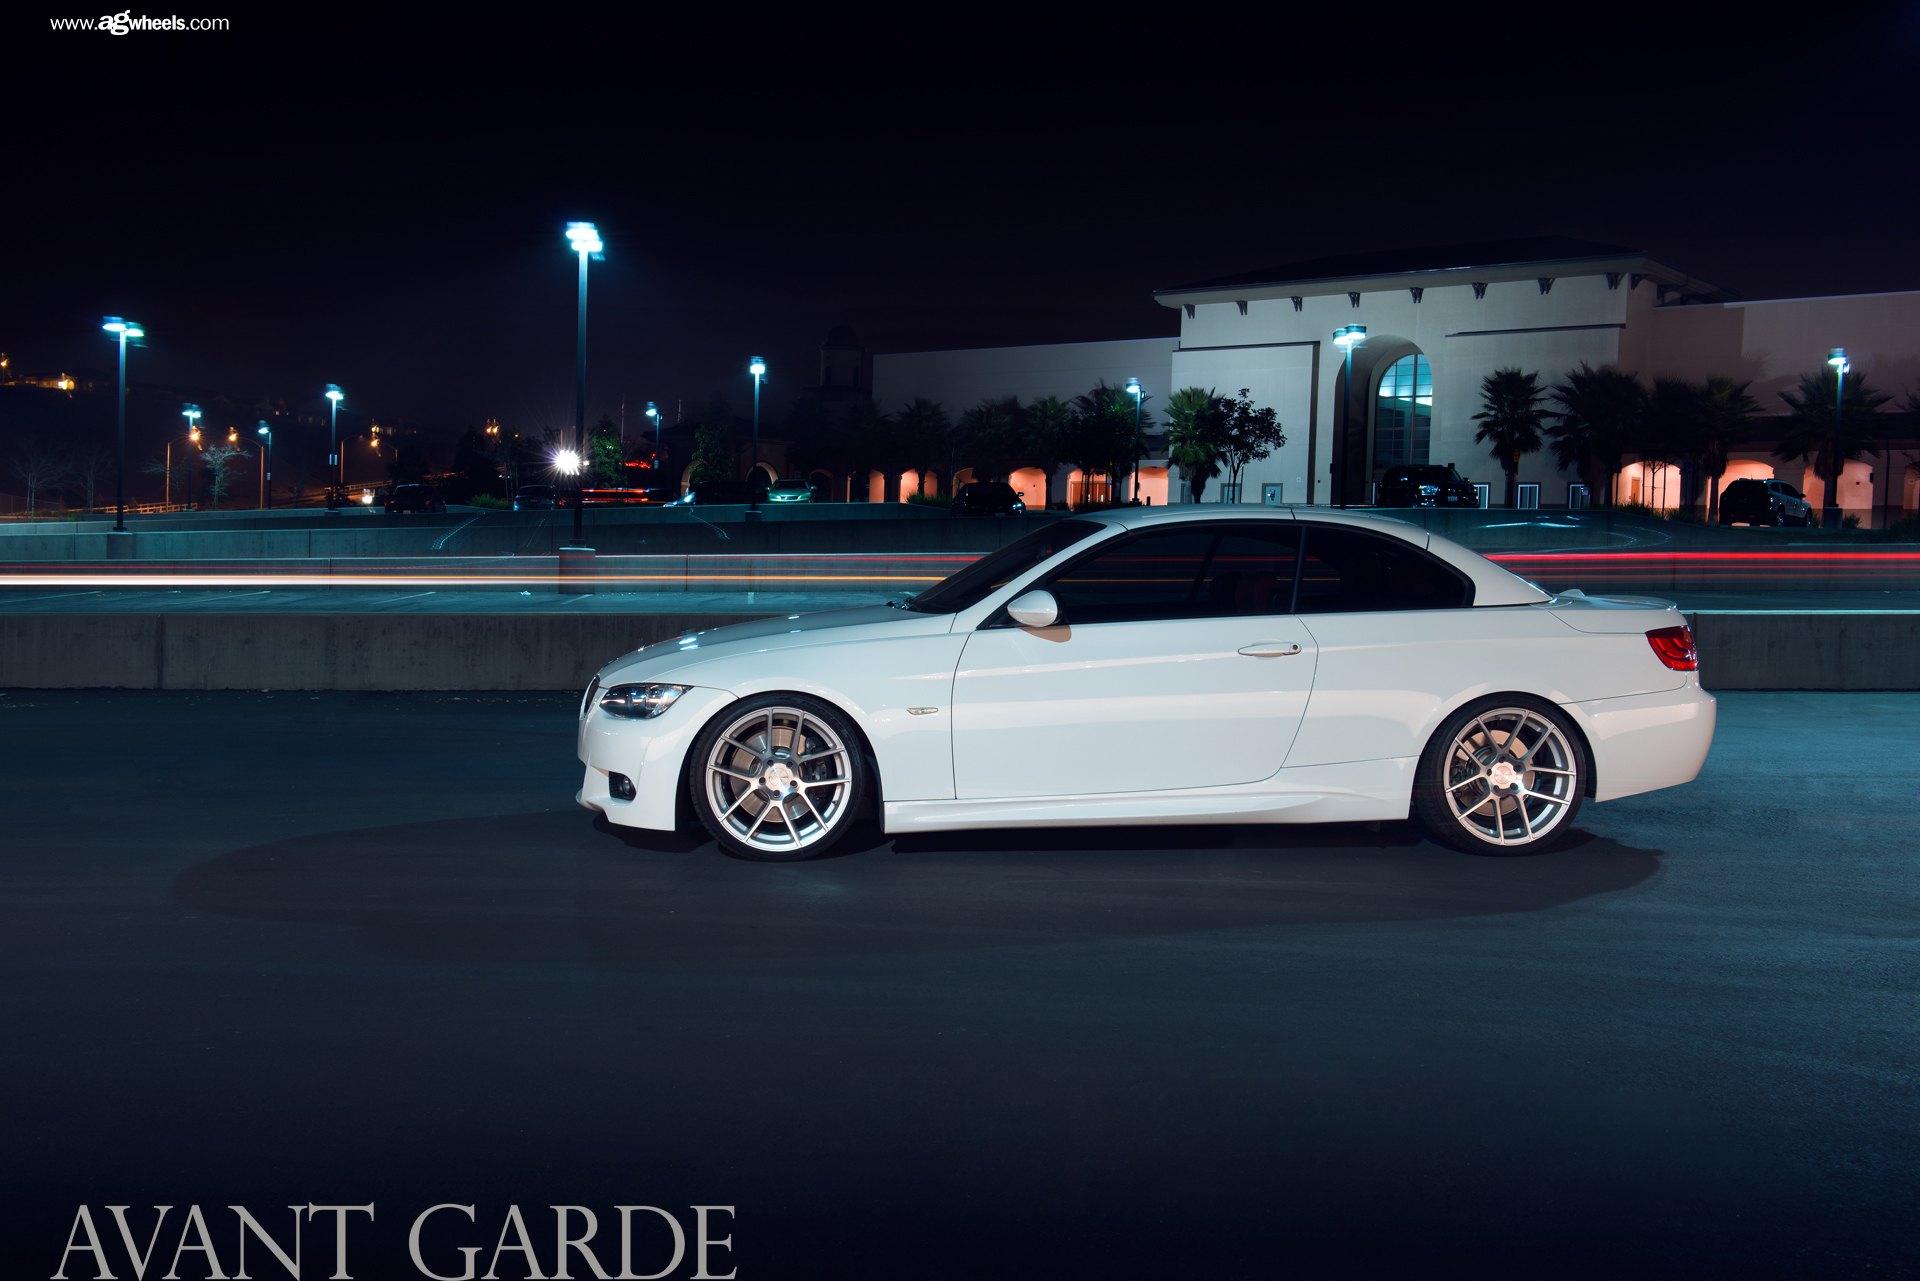 Custom Avant Garde Wheels on White BMW 3-Series - Photo by Avant Garde Wheels